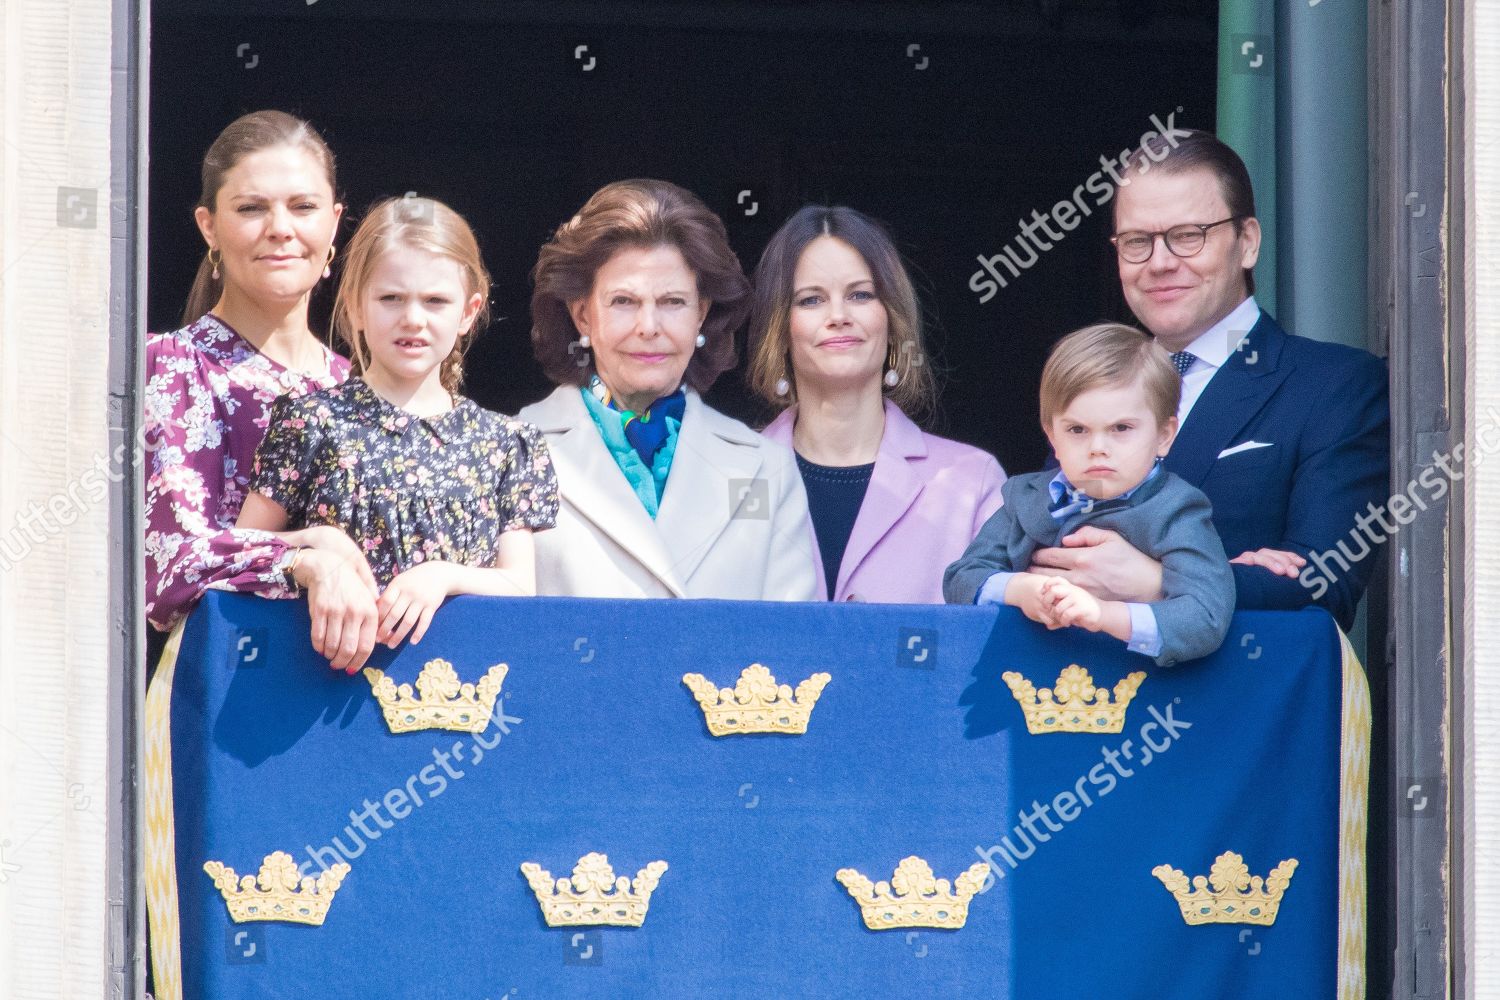 king-carl-gustaf-birthday-celebrations-stockholm-sweden-shutterstock-editorial-10223165t.jpg